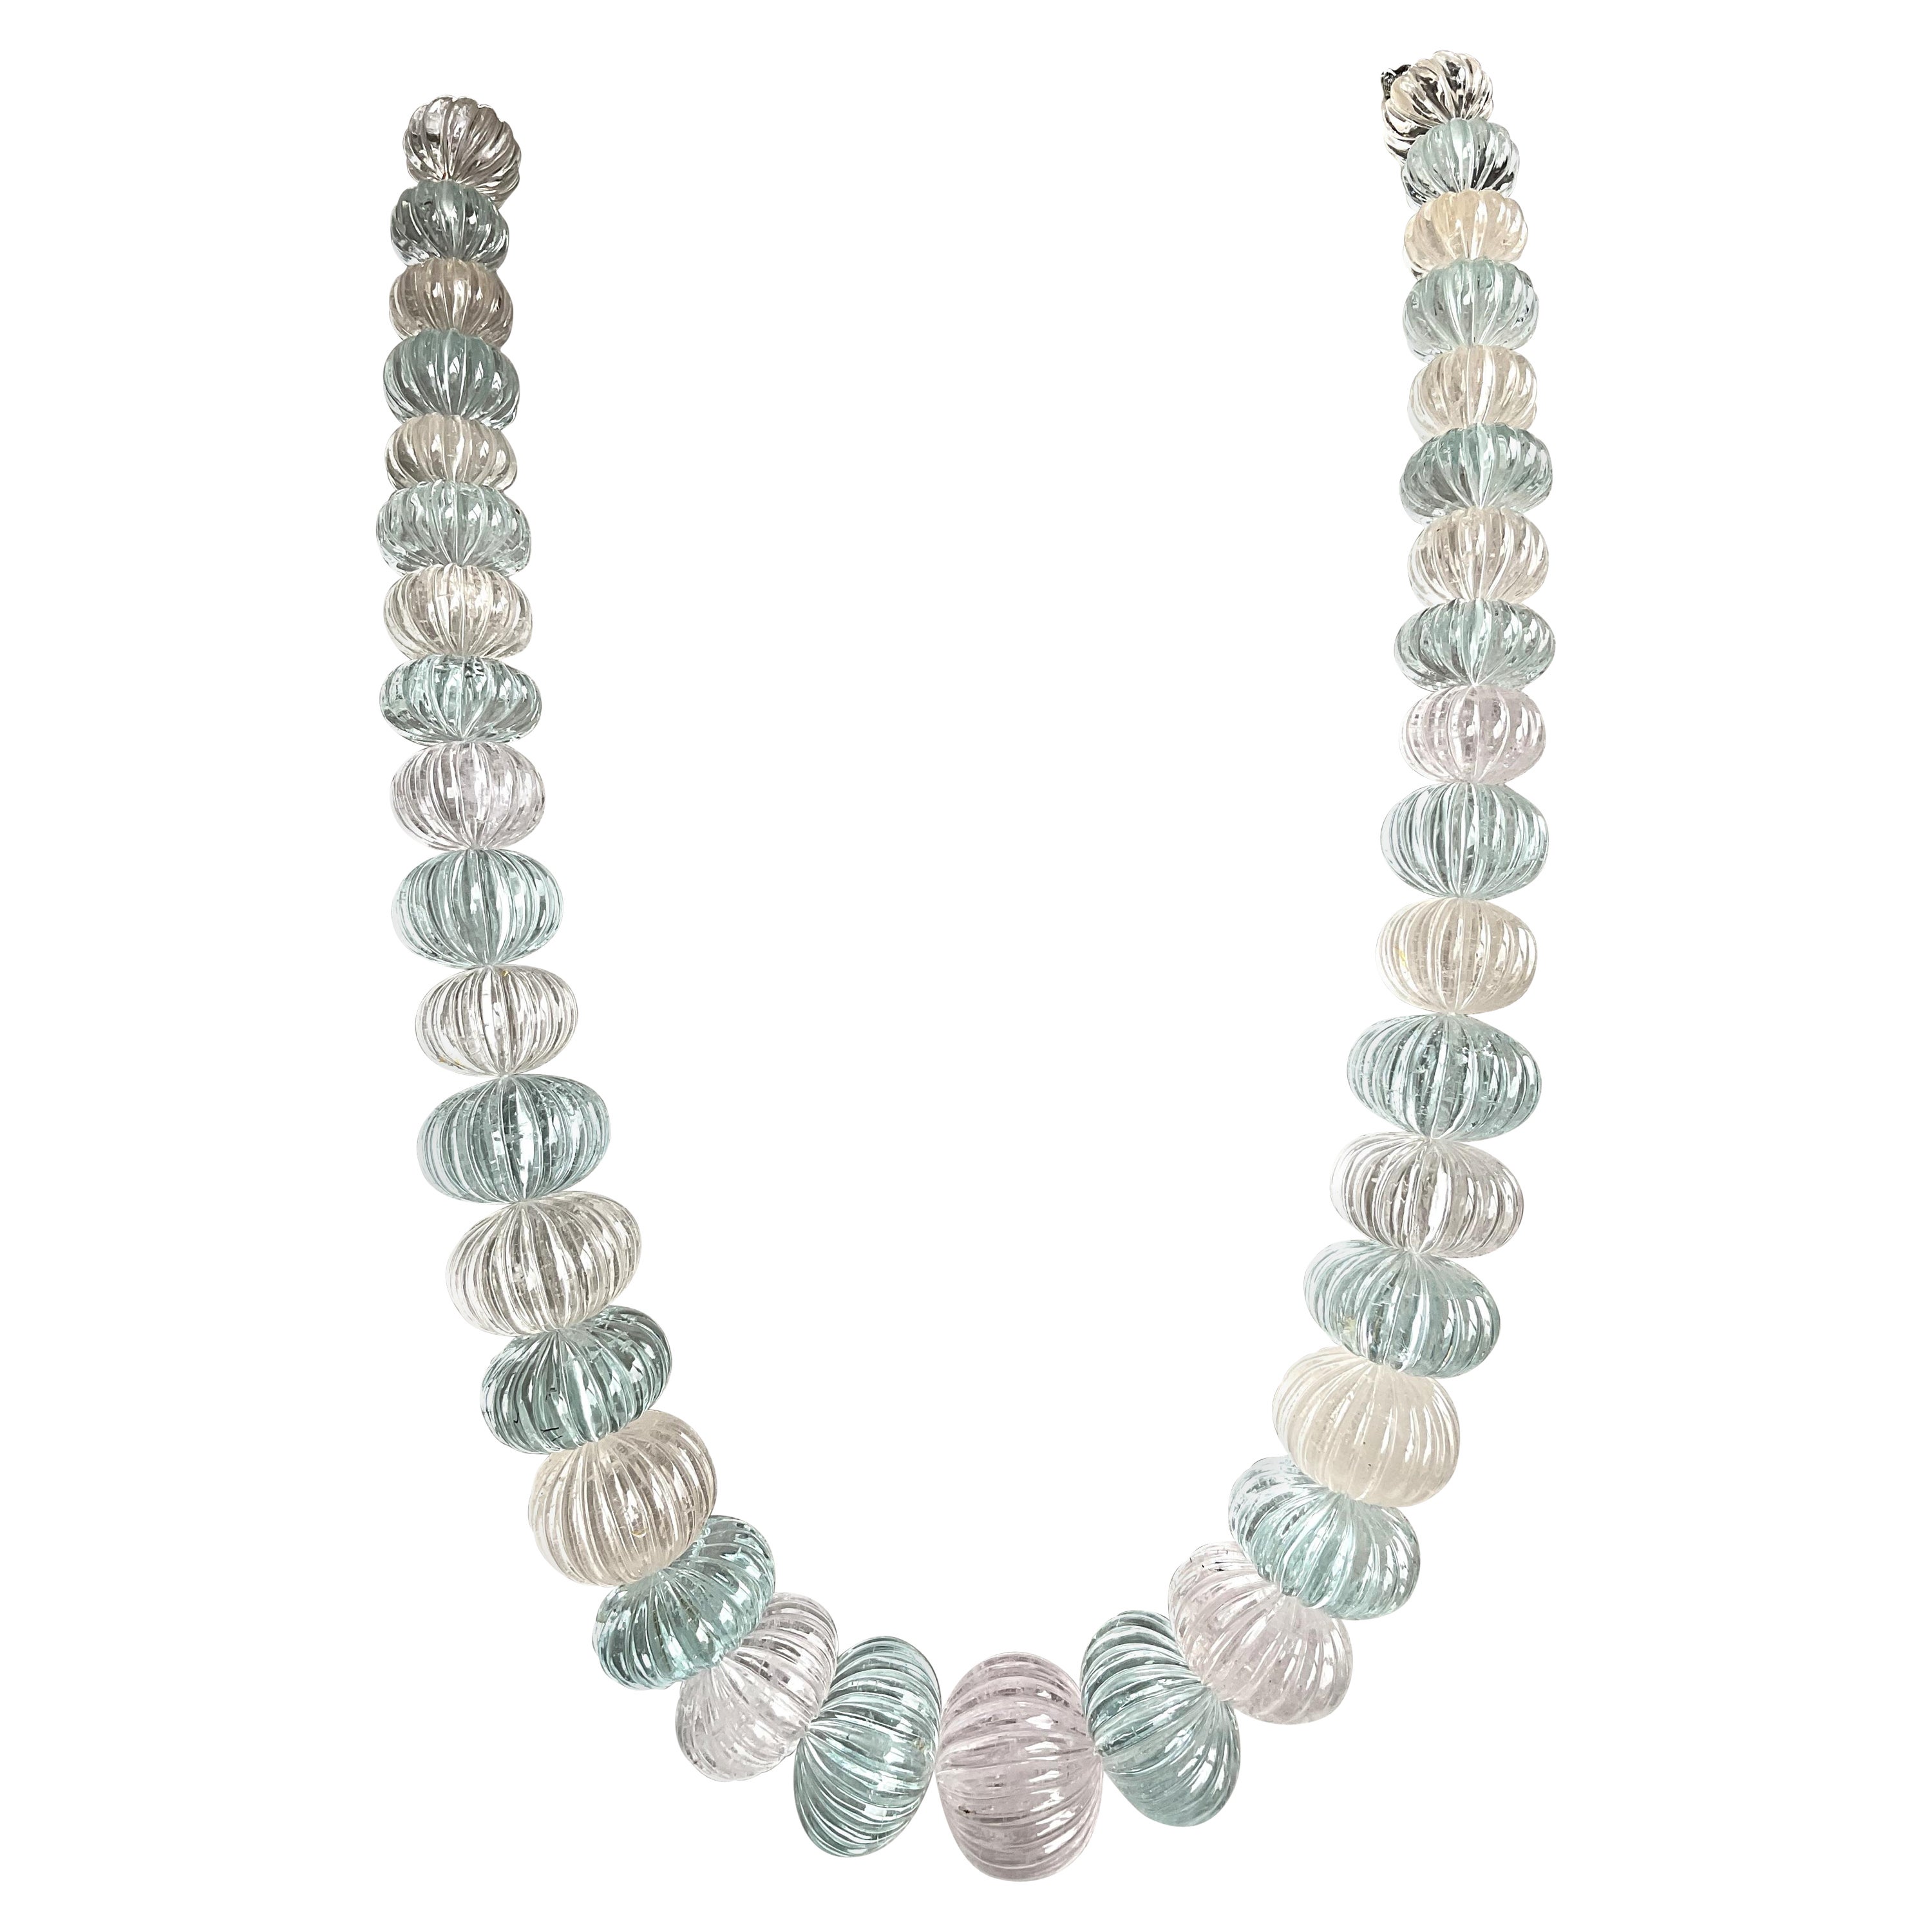 1768.53 Carats grand Aquamarine & Morganite beryl fluted gems beads Necklace 